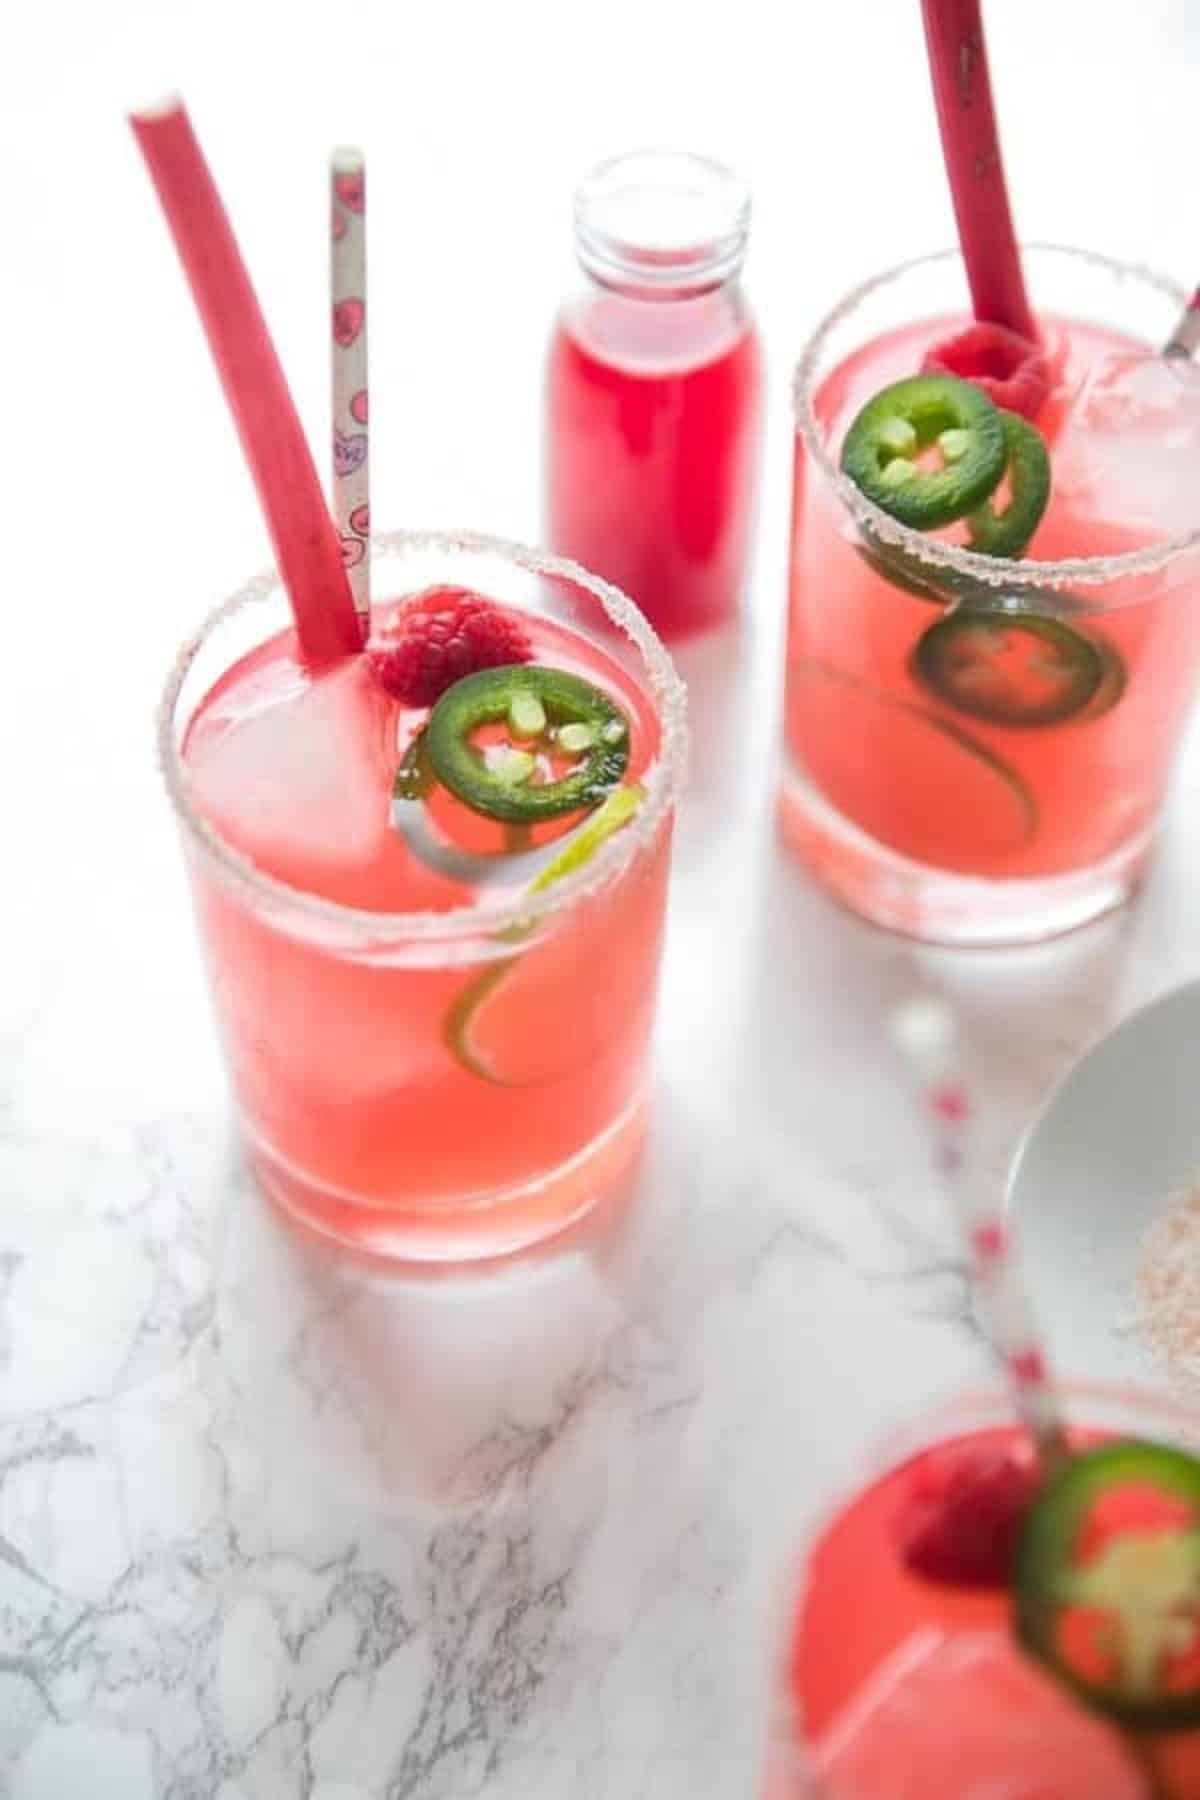 Raspberry Rhubarb Margaritas with jalapenos and straws.